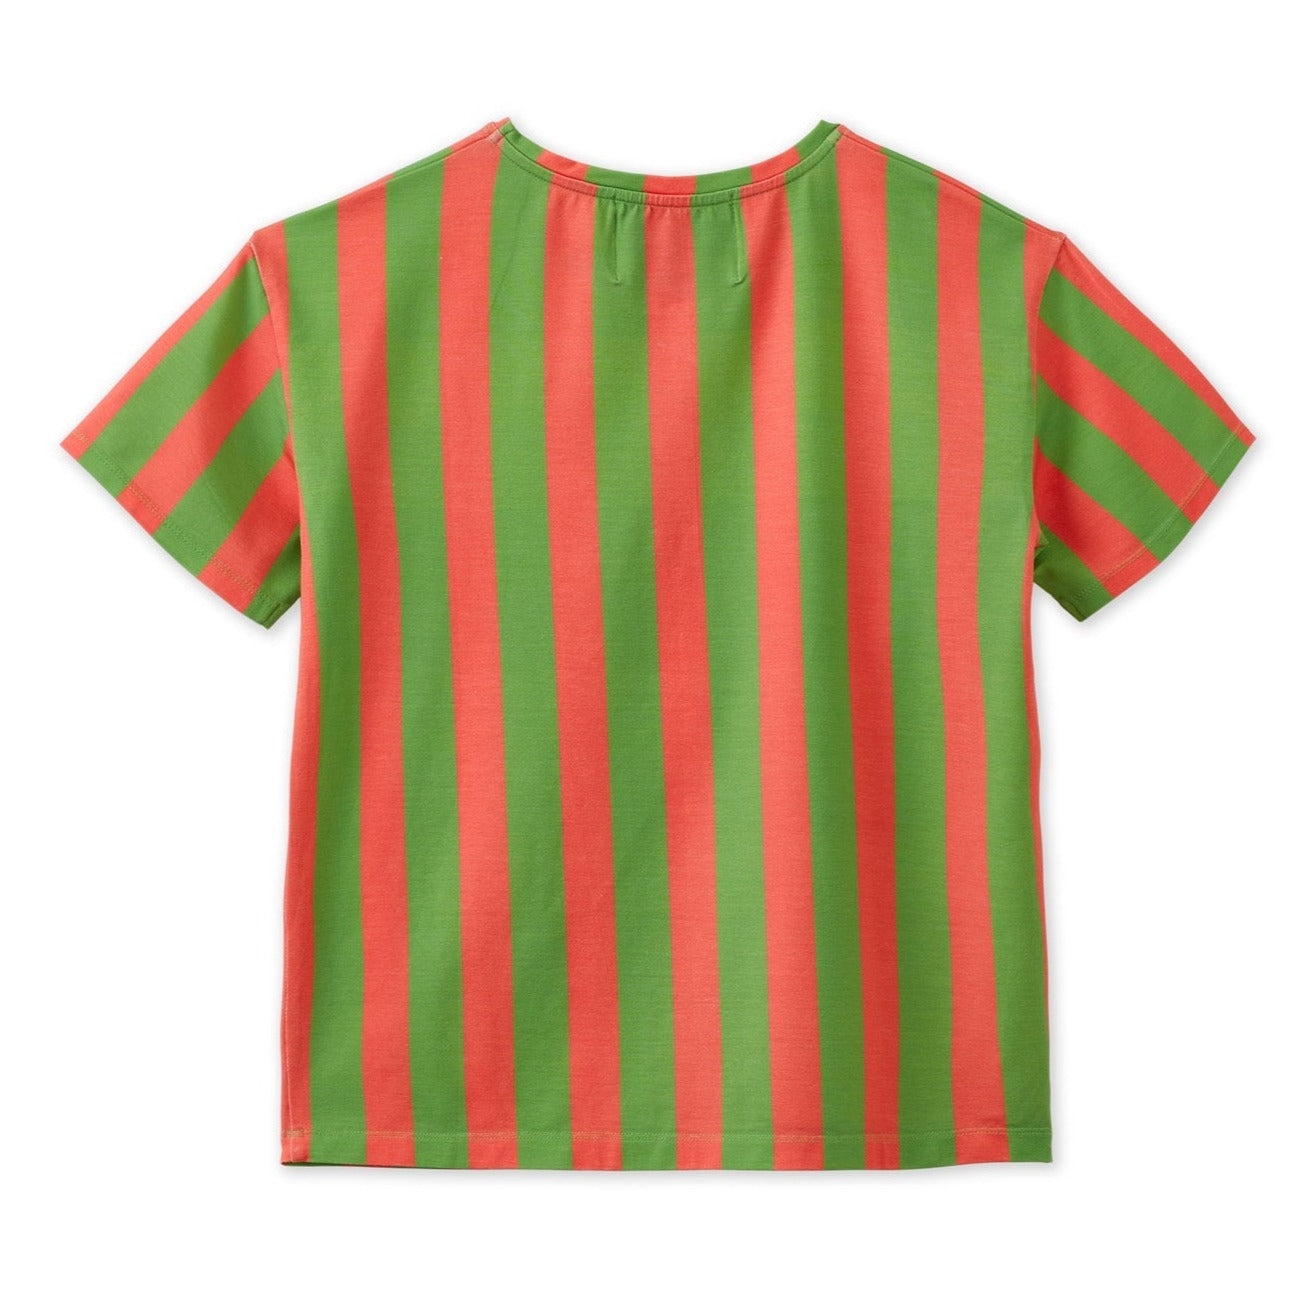 Striped Tencel T-Shirt by Vild House of Little